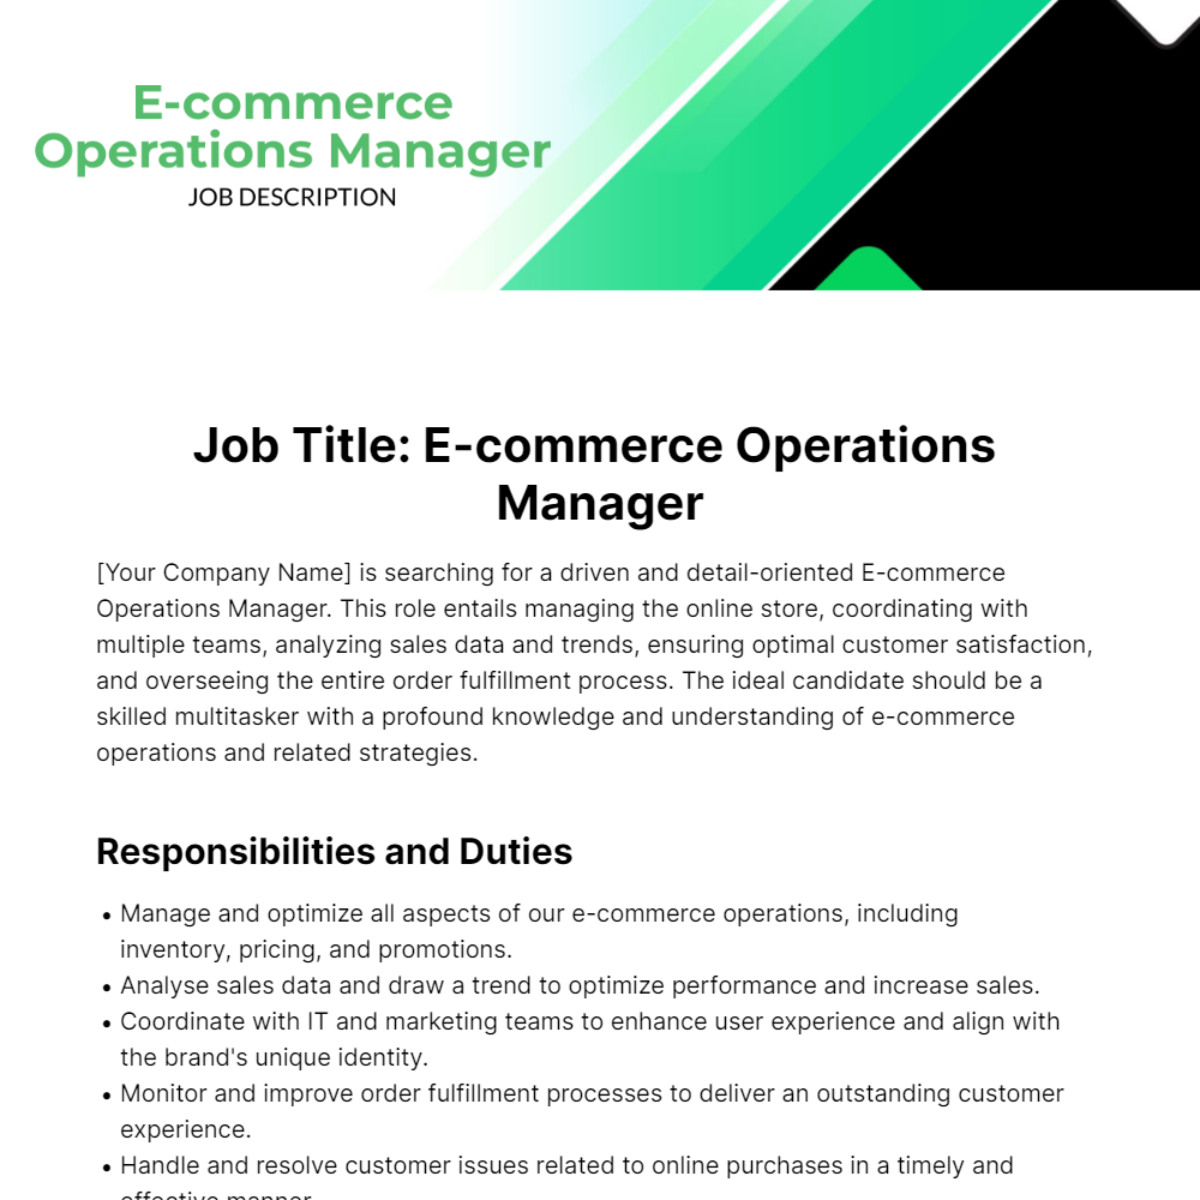 E-commerce Operations Manager Job Description Template